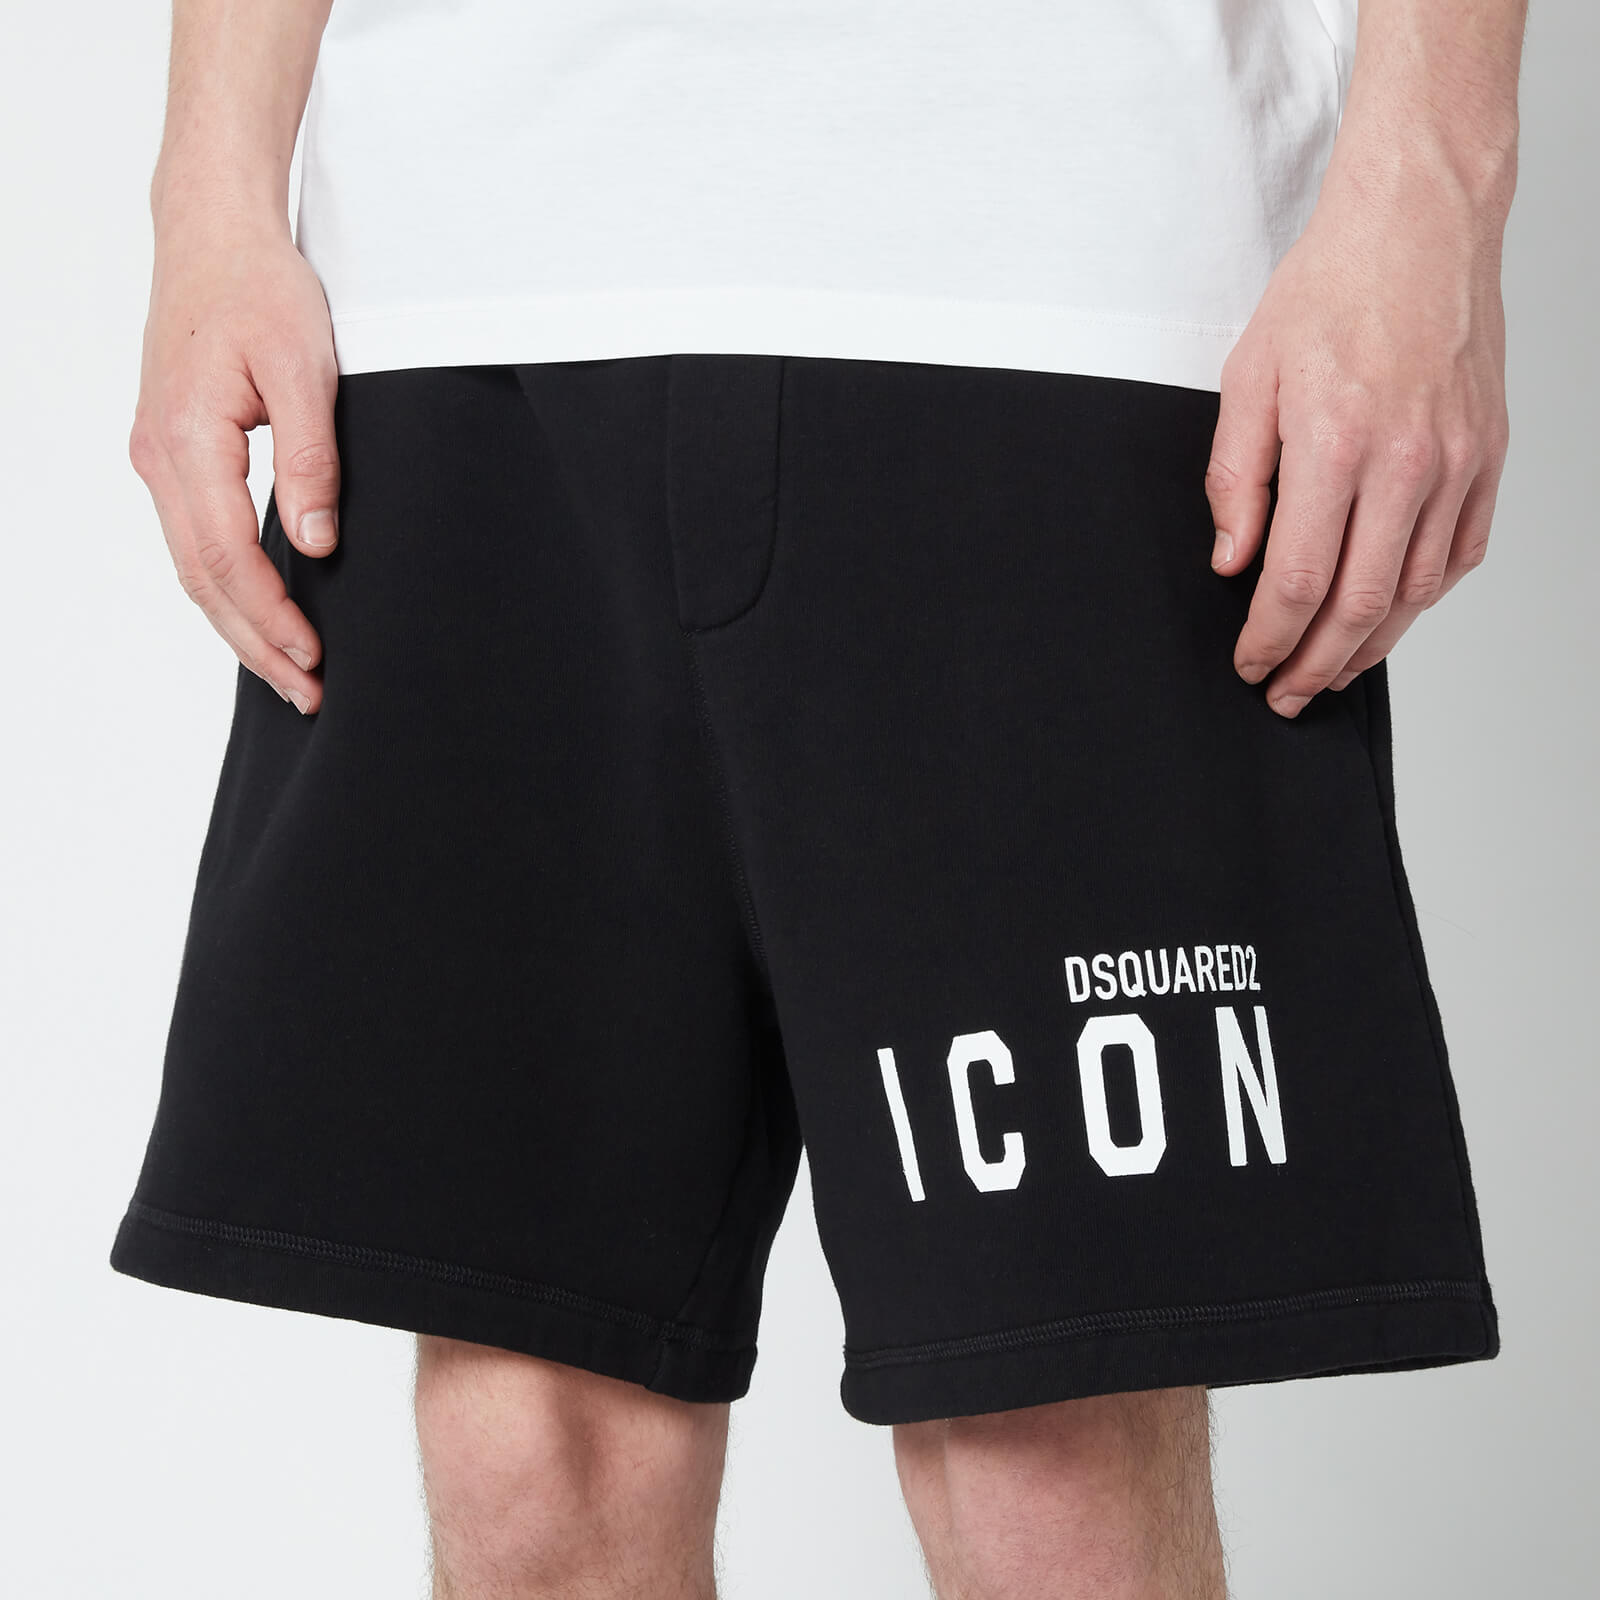 Dsquared2 Men's Relax Fit Icon Shorts - Black/White - L